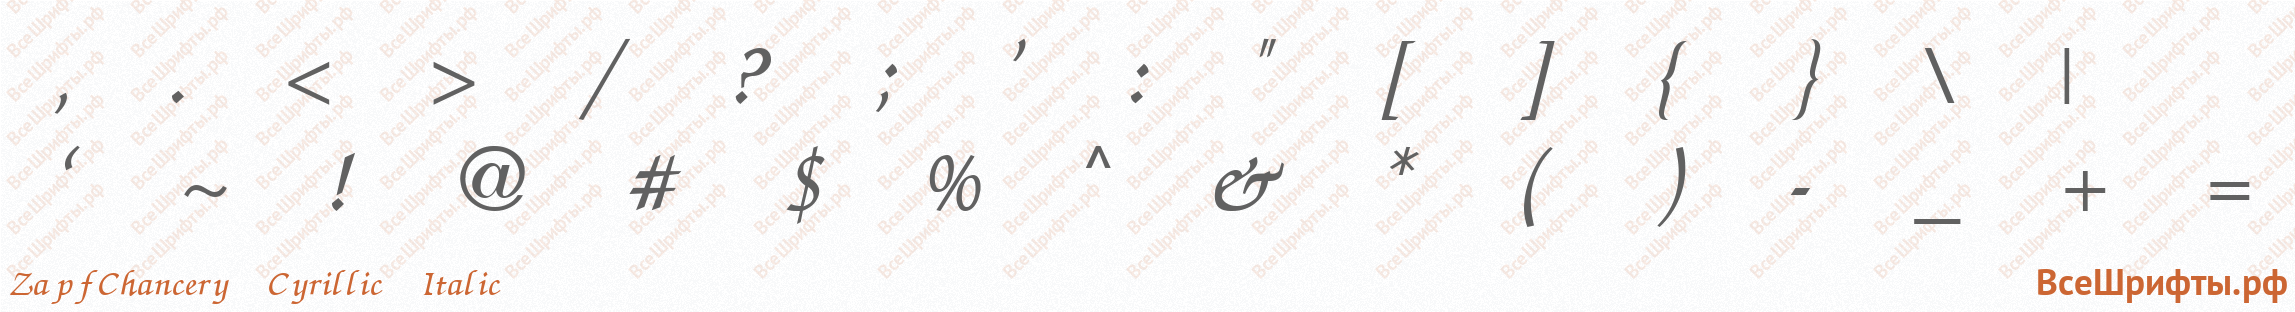 Шрифт ZapfChancery Cyrillic Italic со знаками препинания и пунктуации